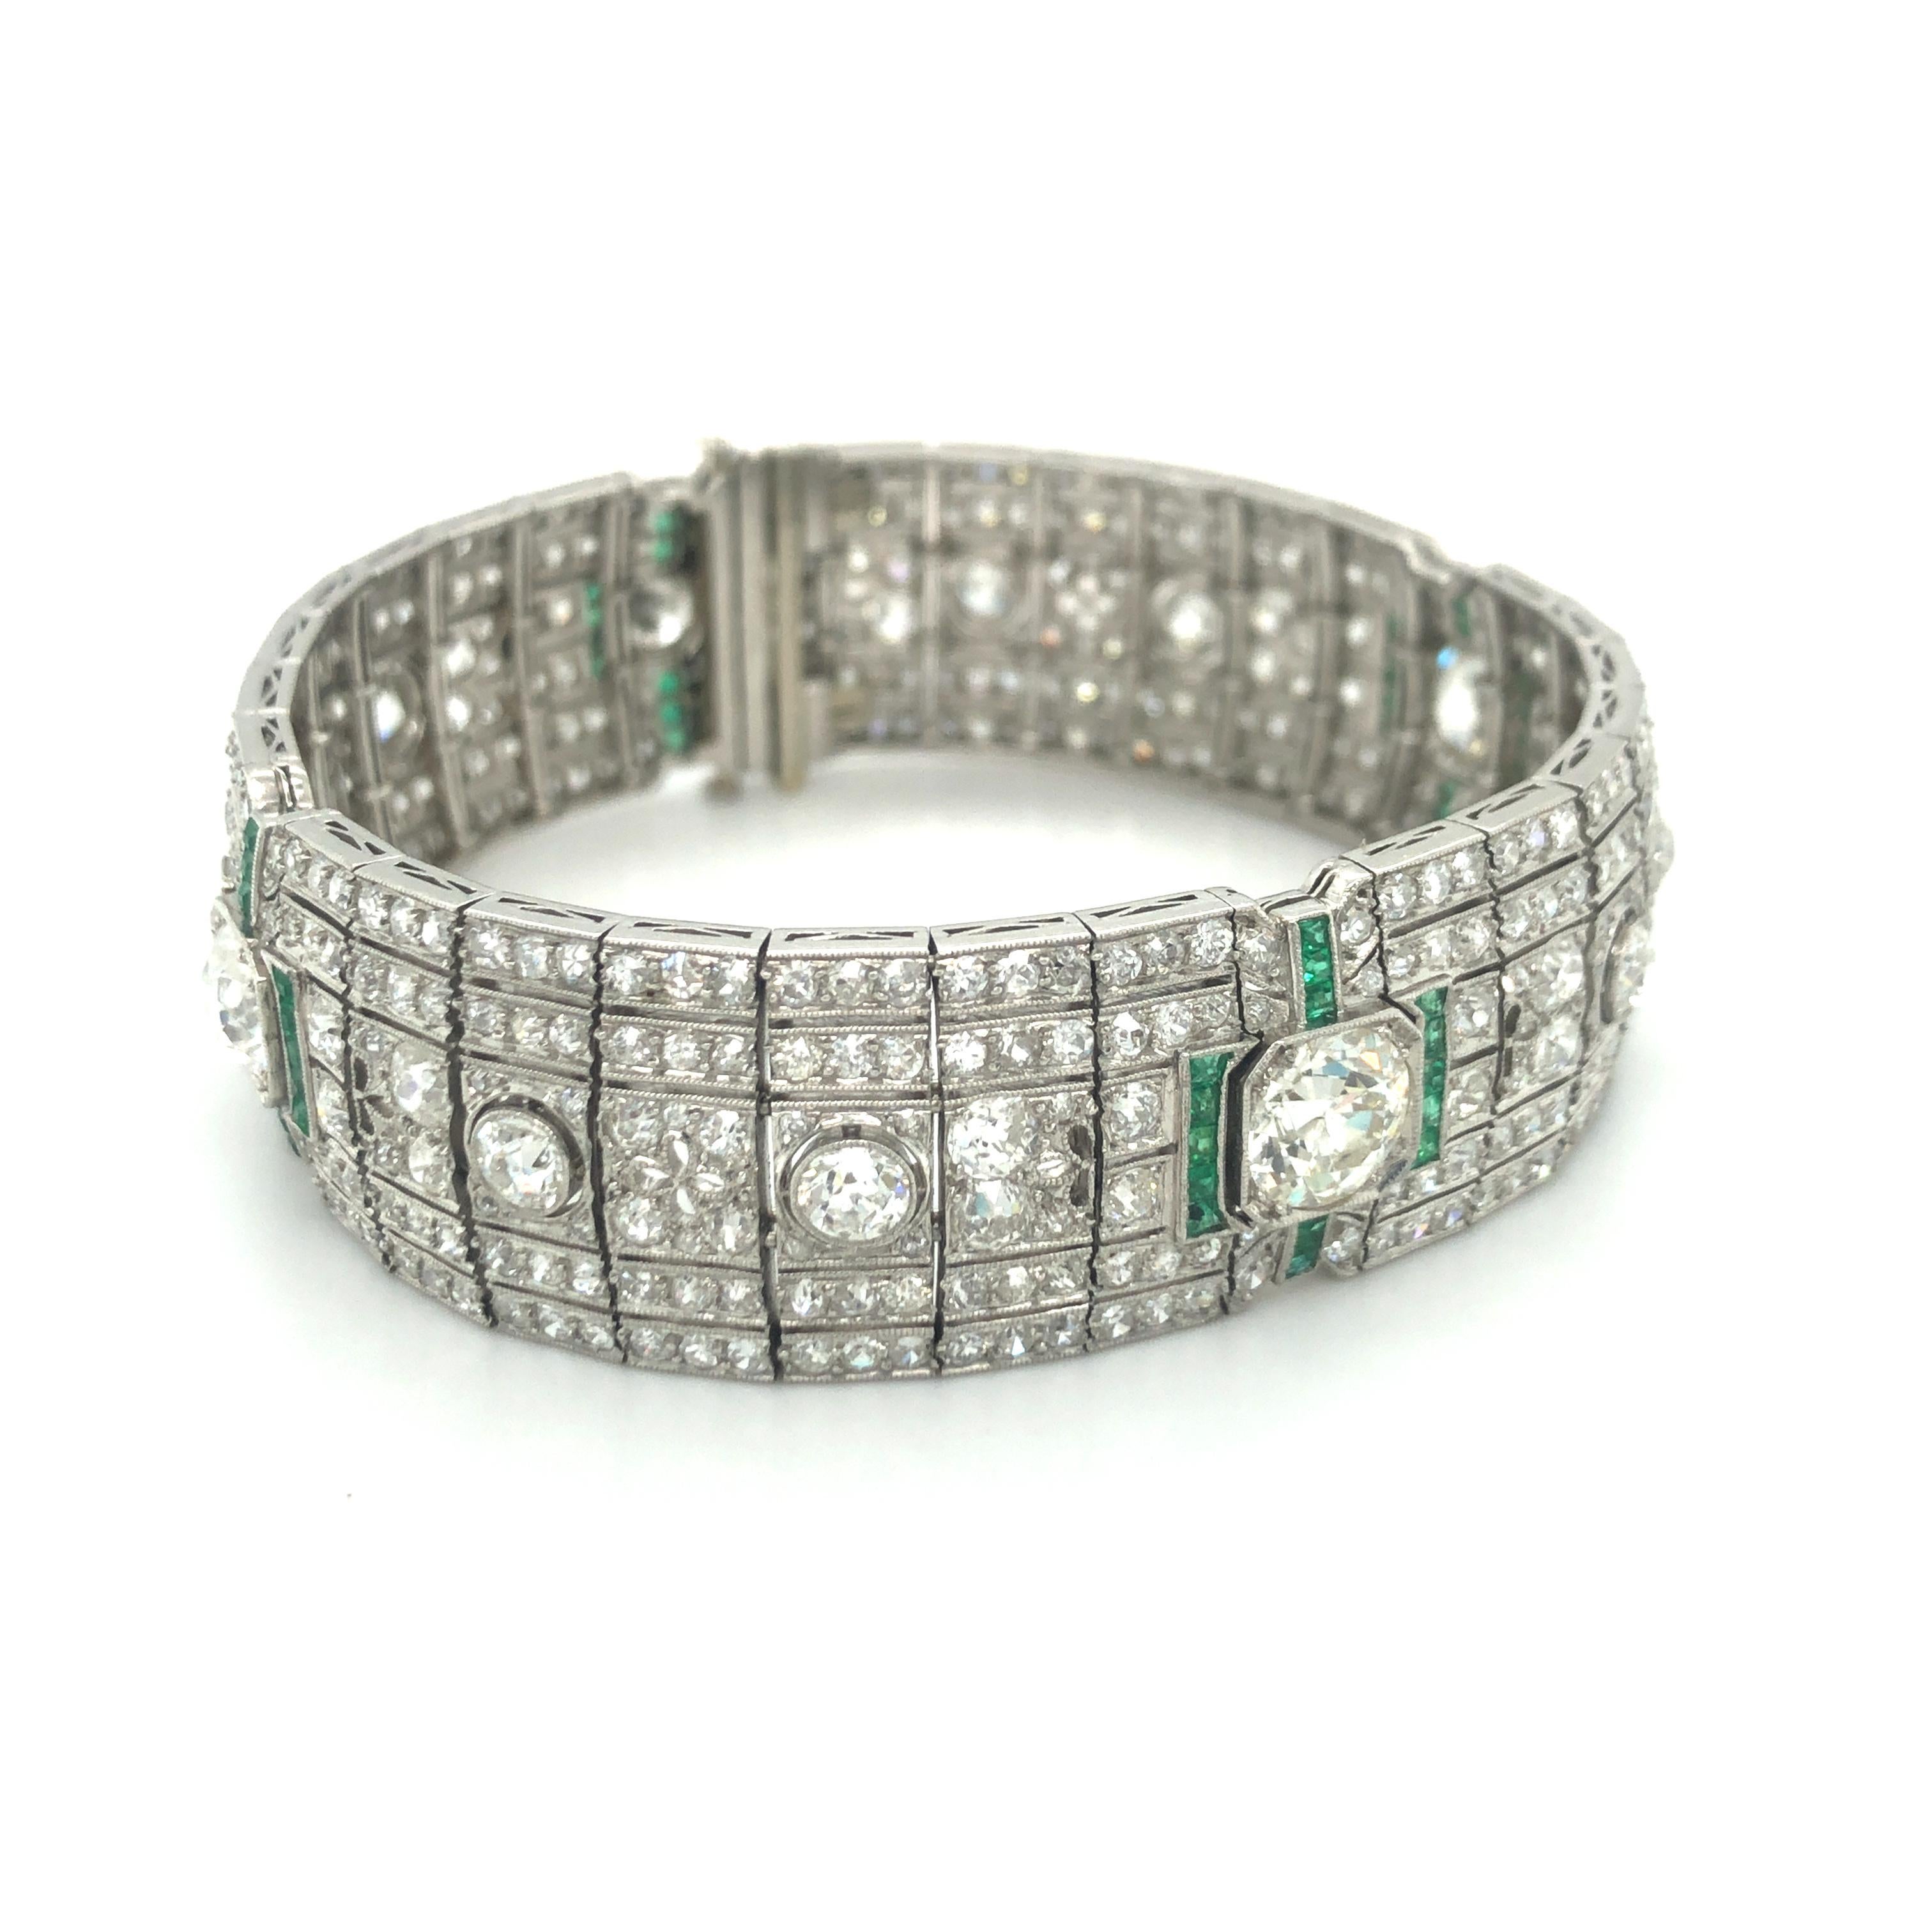  Art Deco Diamond and Emerald Bracelet in Platinum  For Sale 4